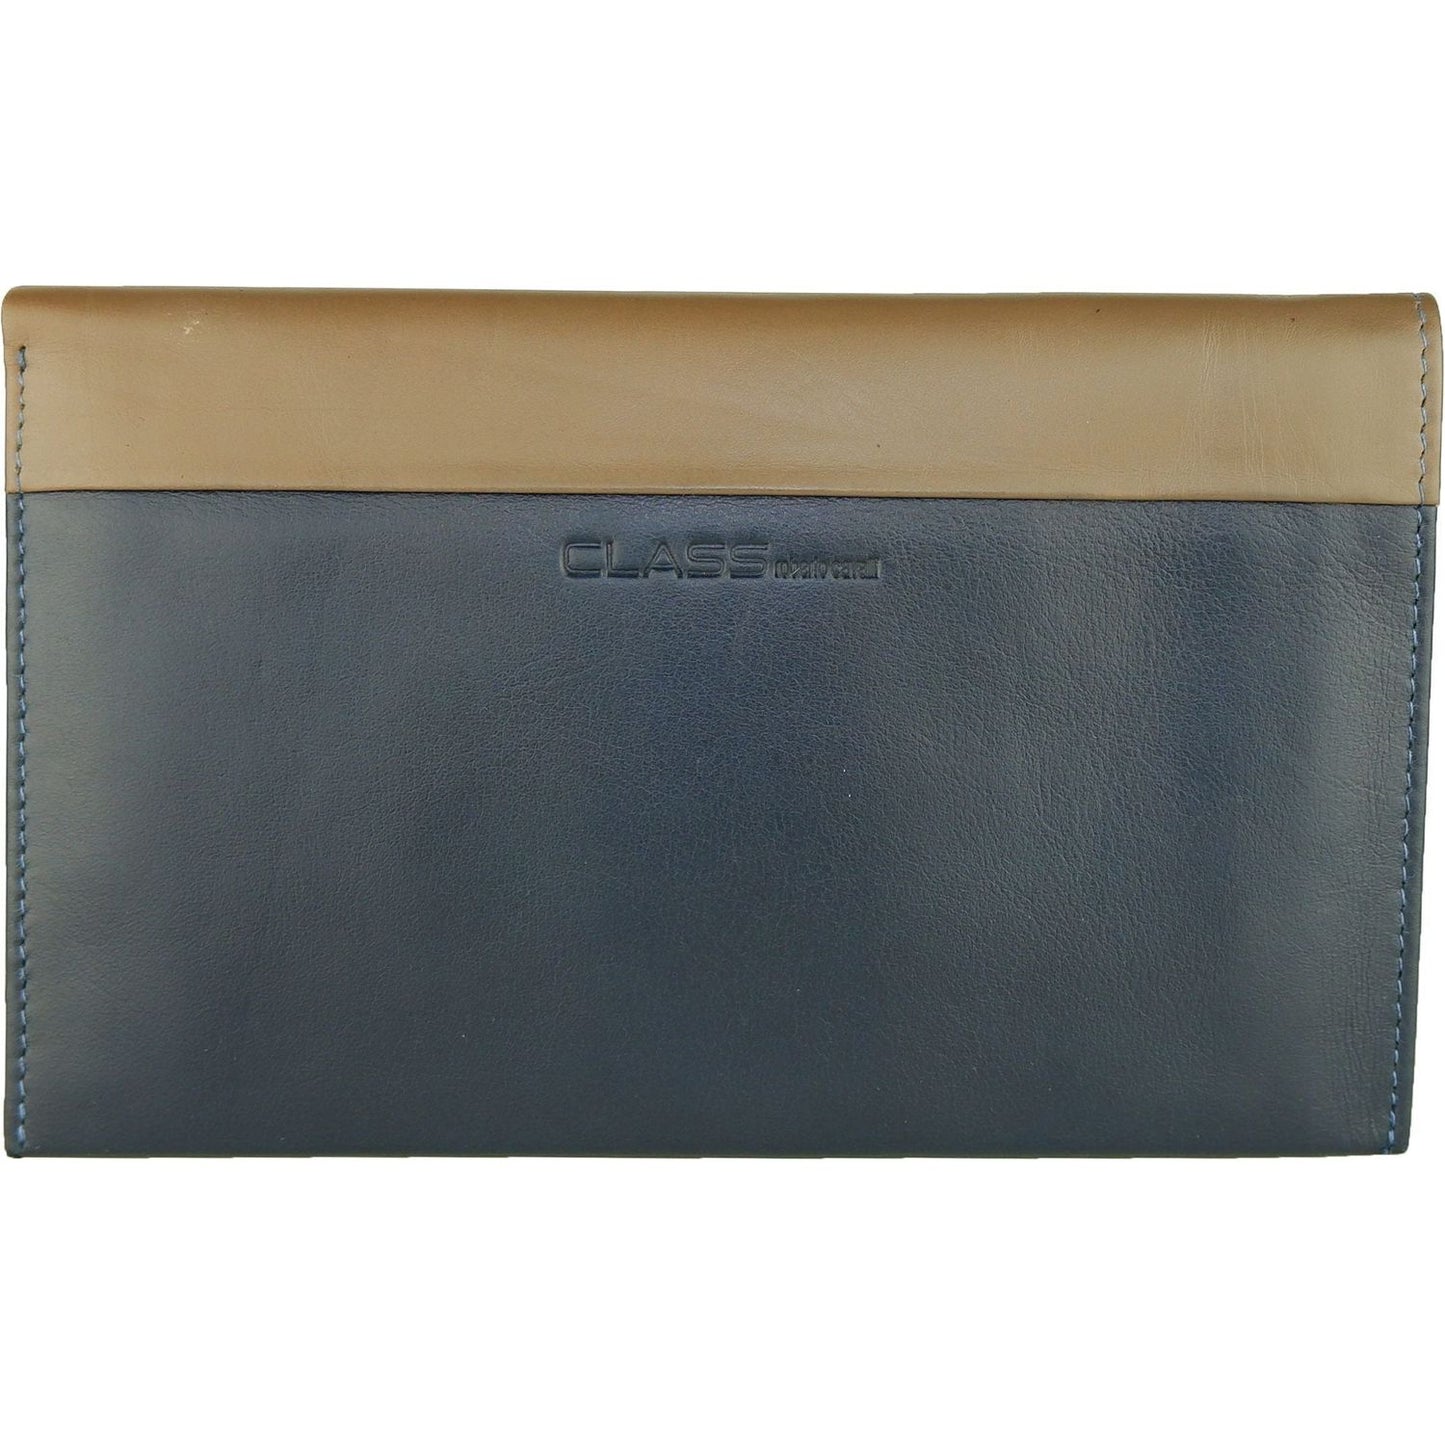 Cavalli Class Sleek Blue and Beige Leather Wallet ar-cavalli-class-wallet MAN WALLETS product-6851-987998335-scaled-75a7b6f6-2df.jpg